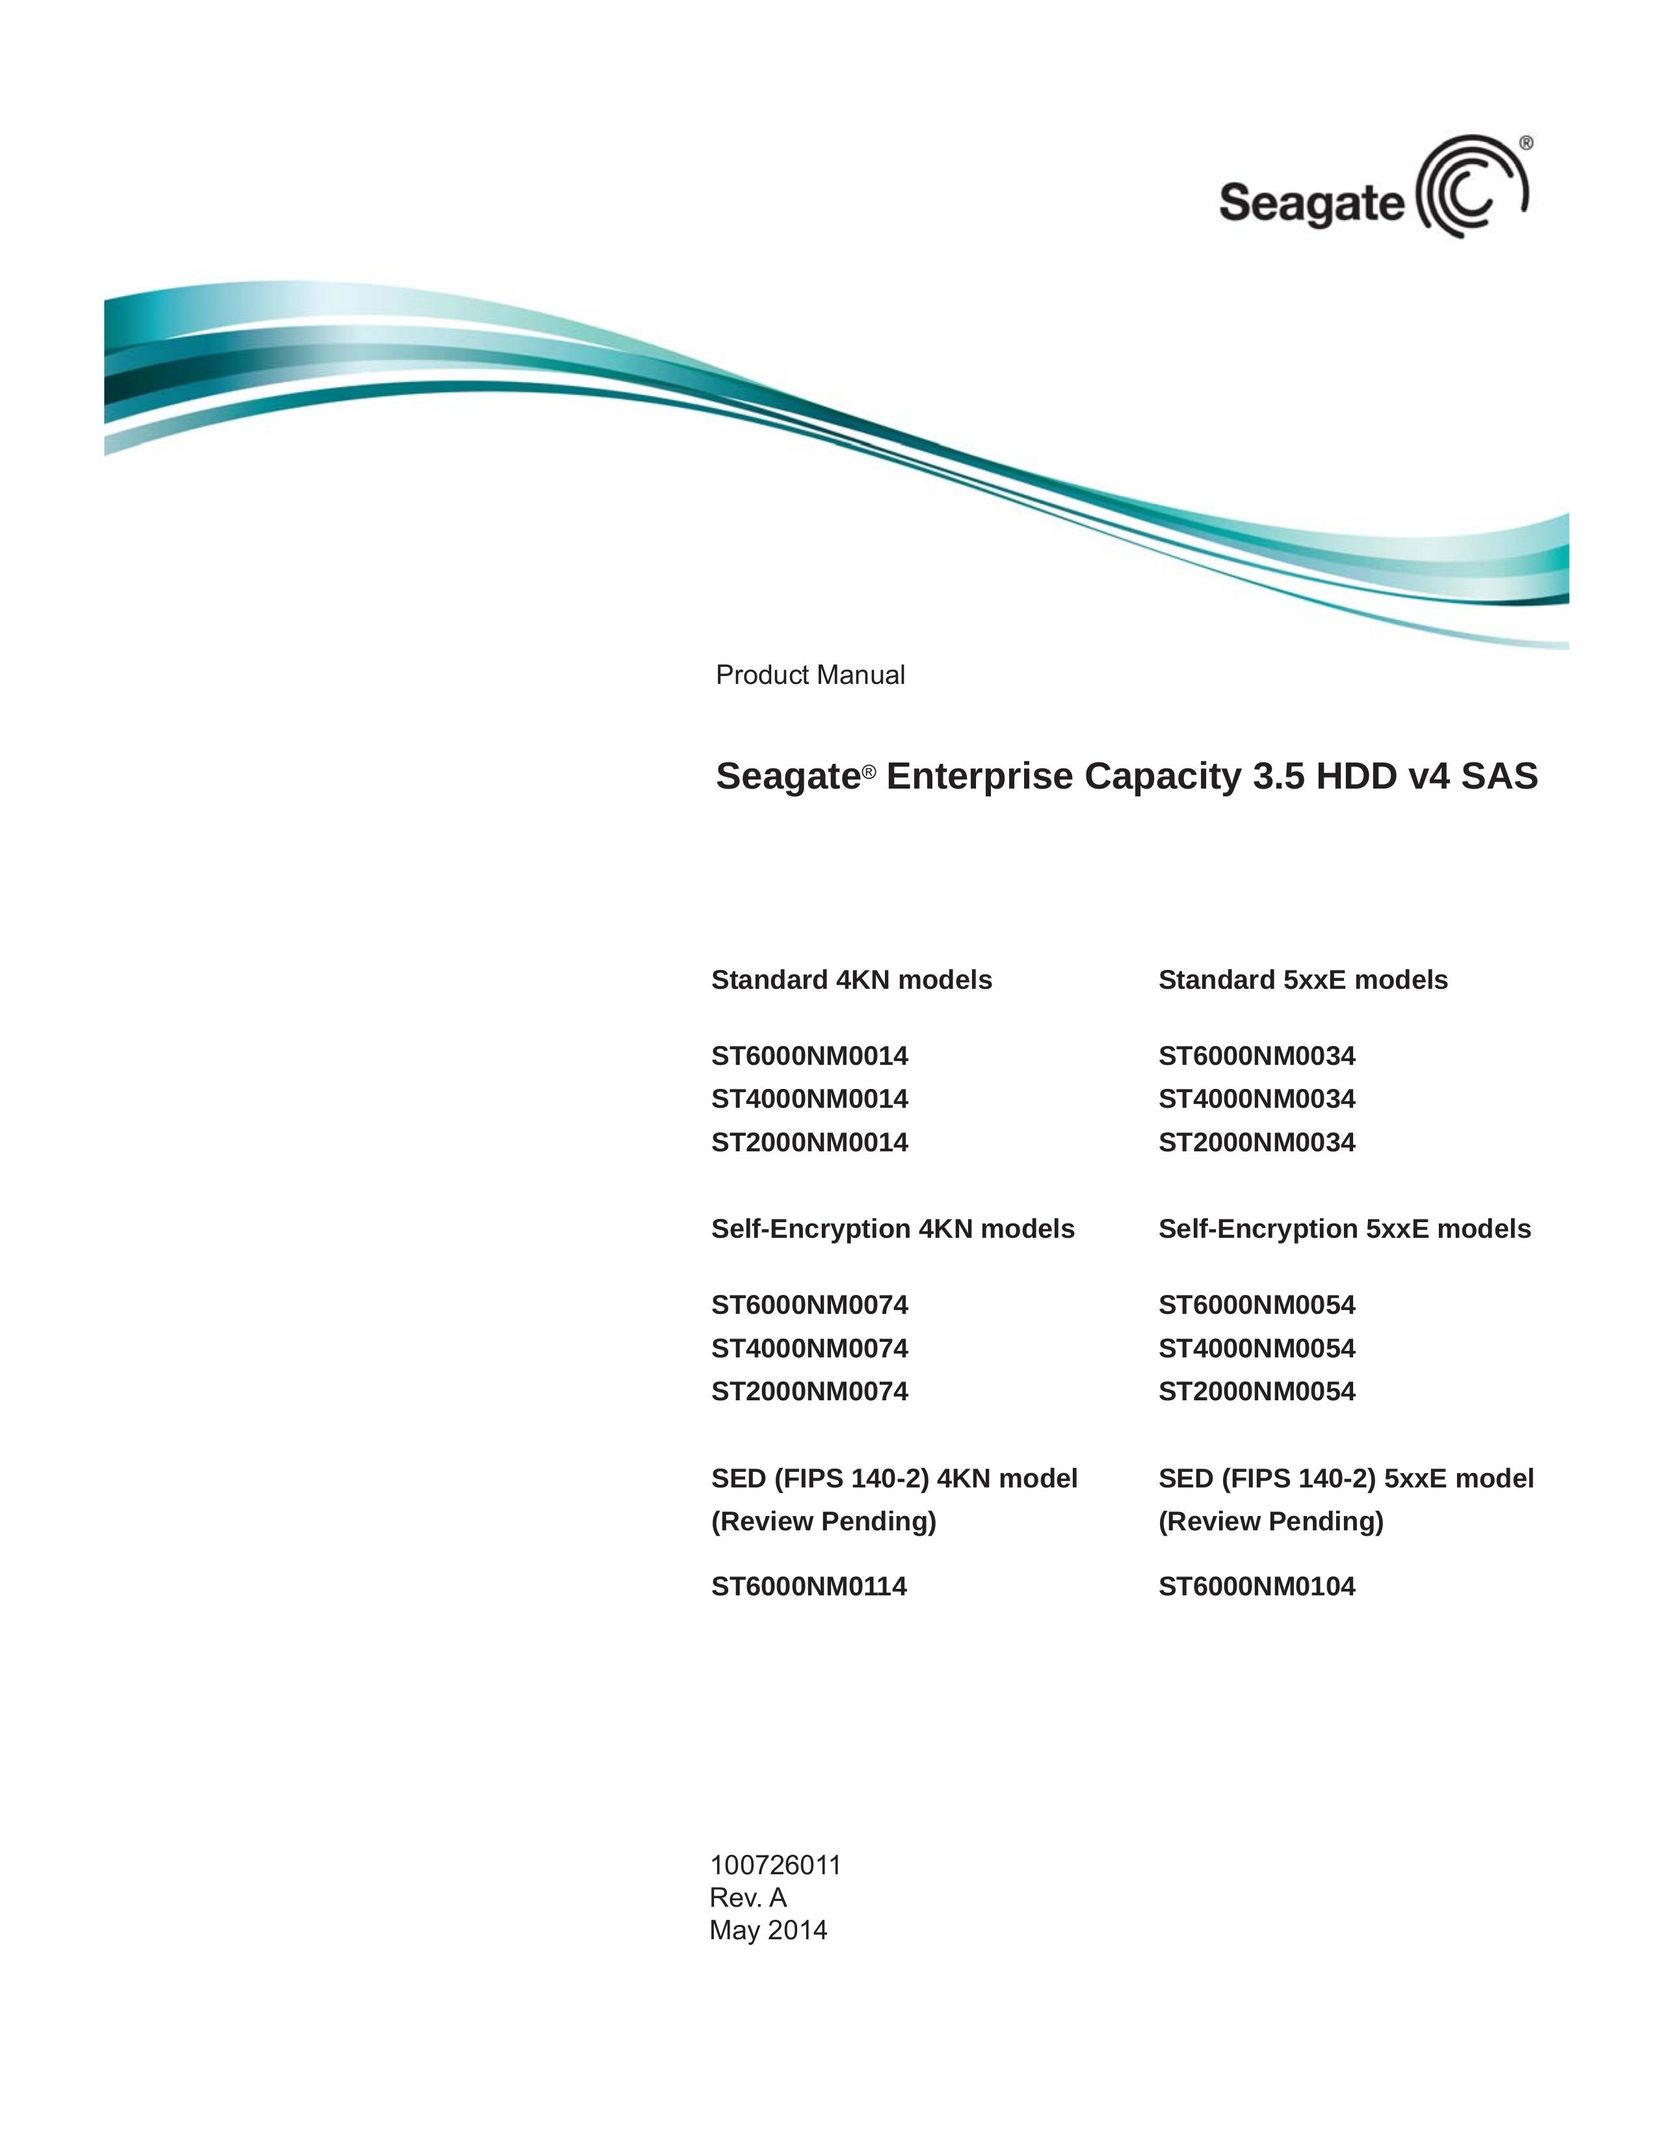 Seagate ST2000NM0014 Laptop User Manual